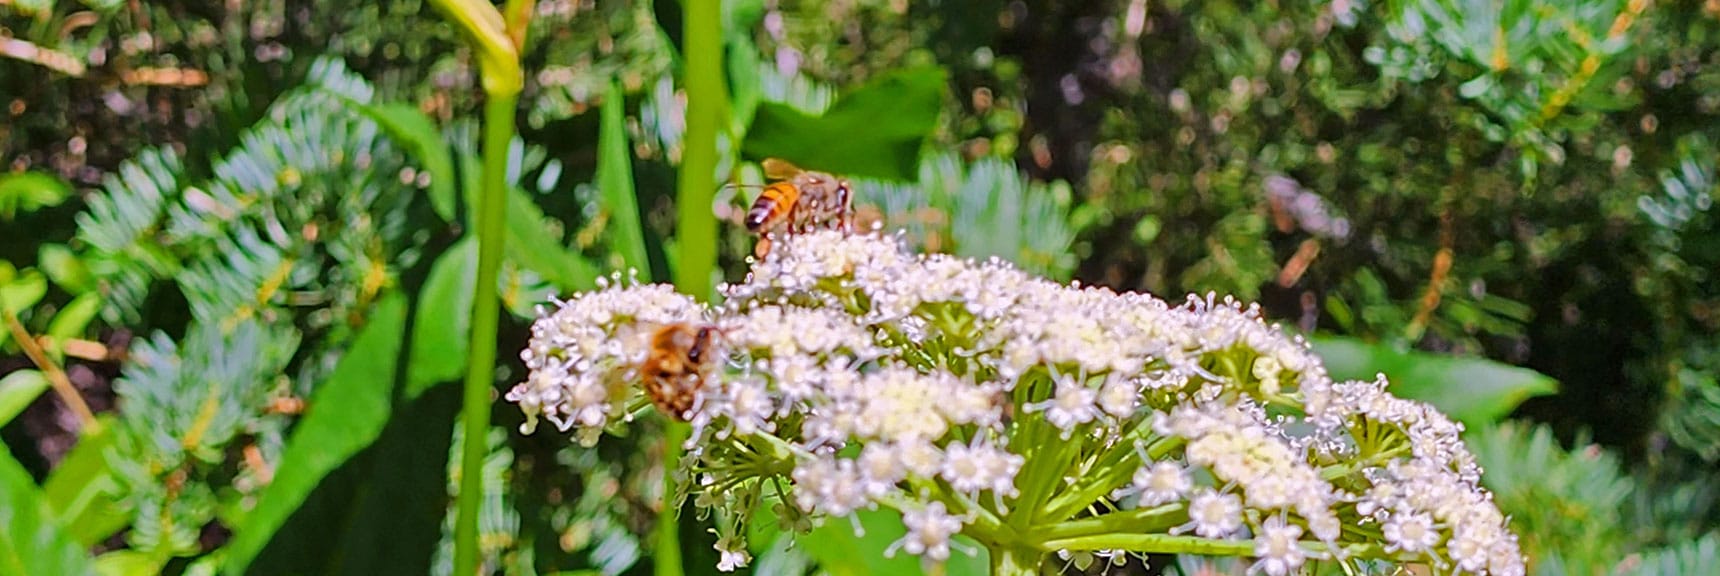 Bees Enjoying Spring Flowers in Late July | Fletcher Canyon / Fletcher Peak / Cockscomb Ridge Circuit | Mt. Charleston Wilderness | Spring Mountains, Nevada